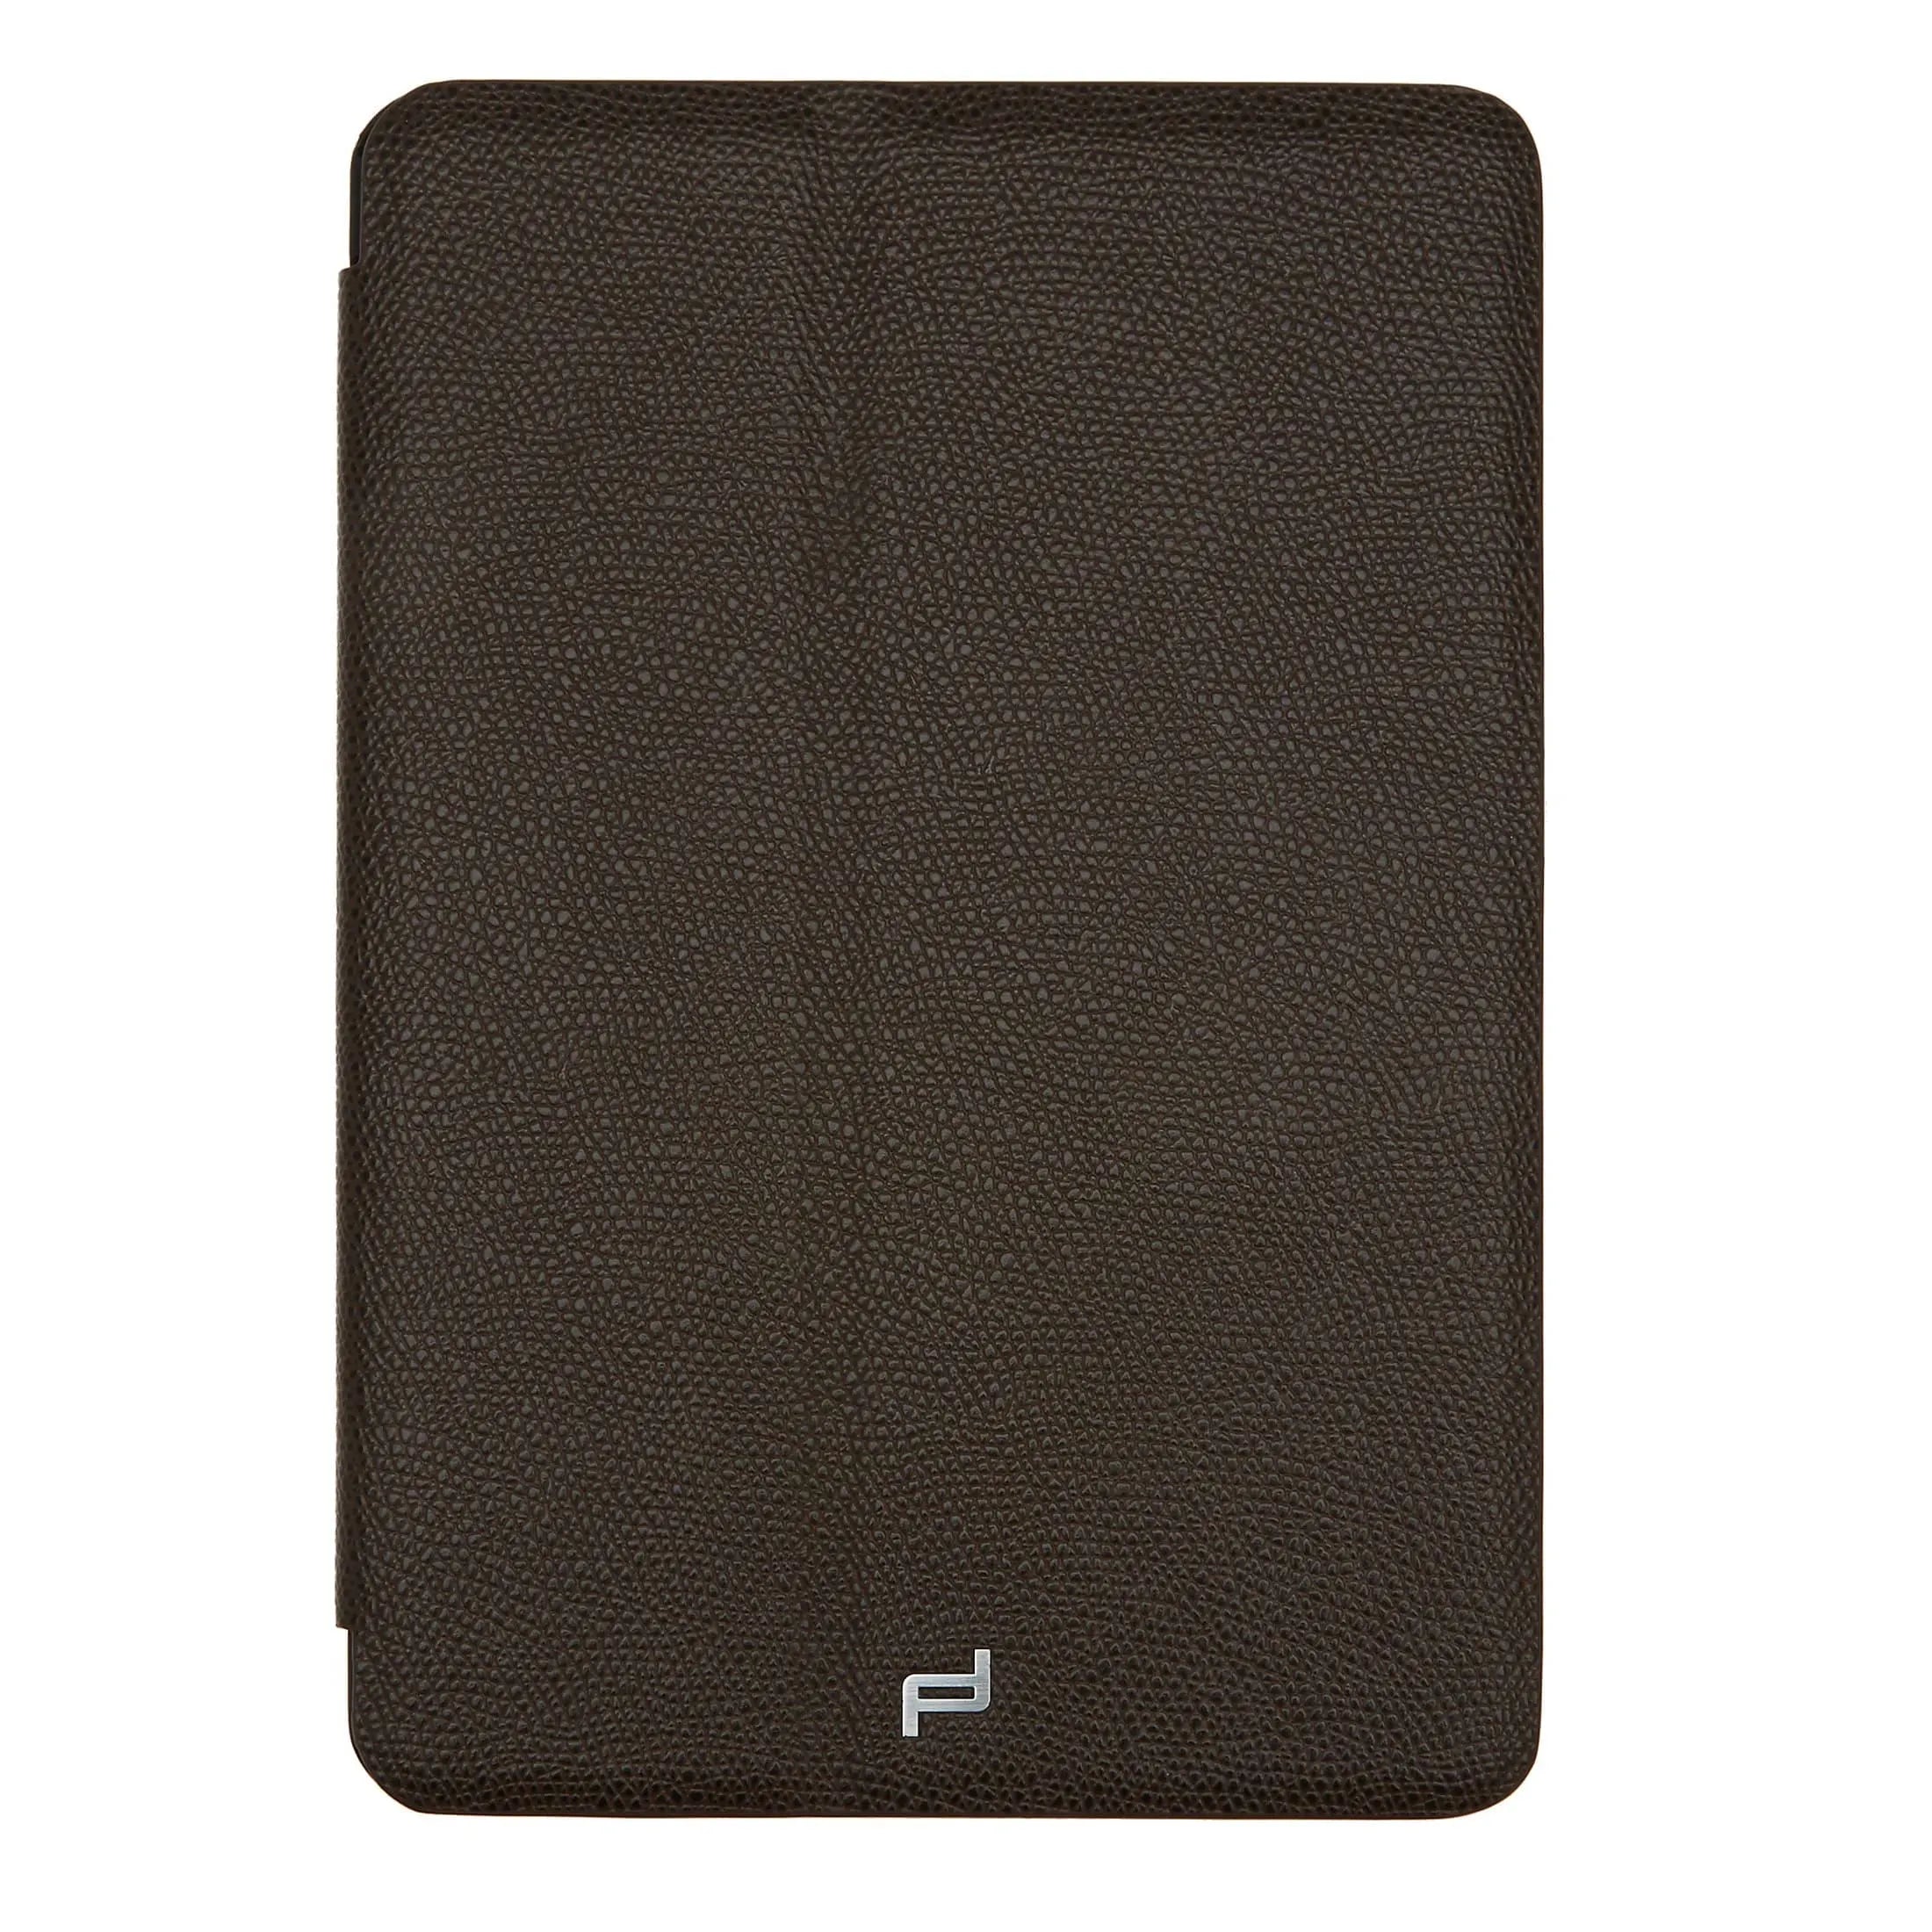 Coque iPad mini Porsche Design French Classic 3.0 Portfolio 20 cm - marron foncé